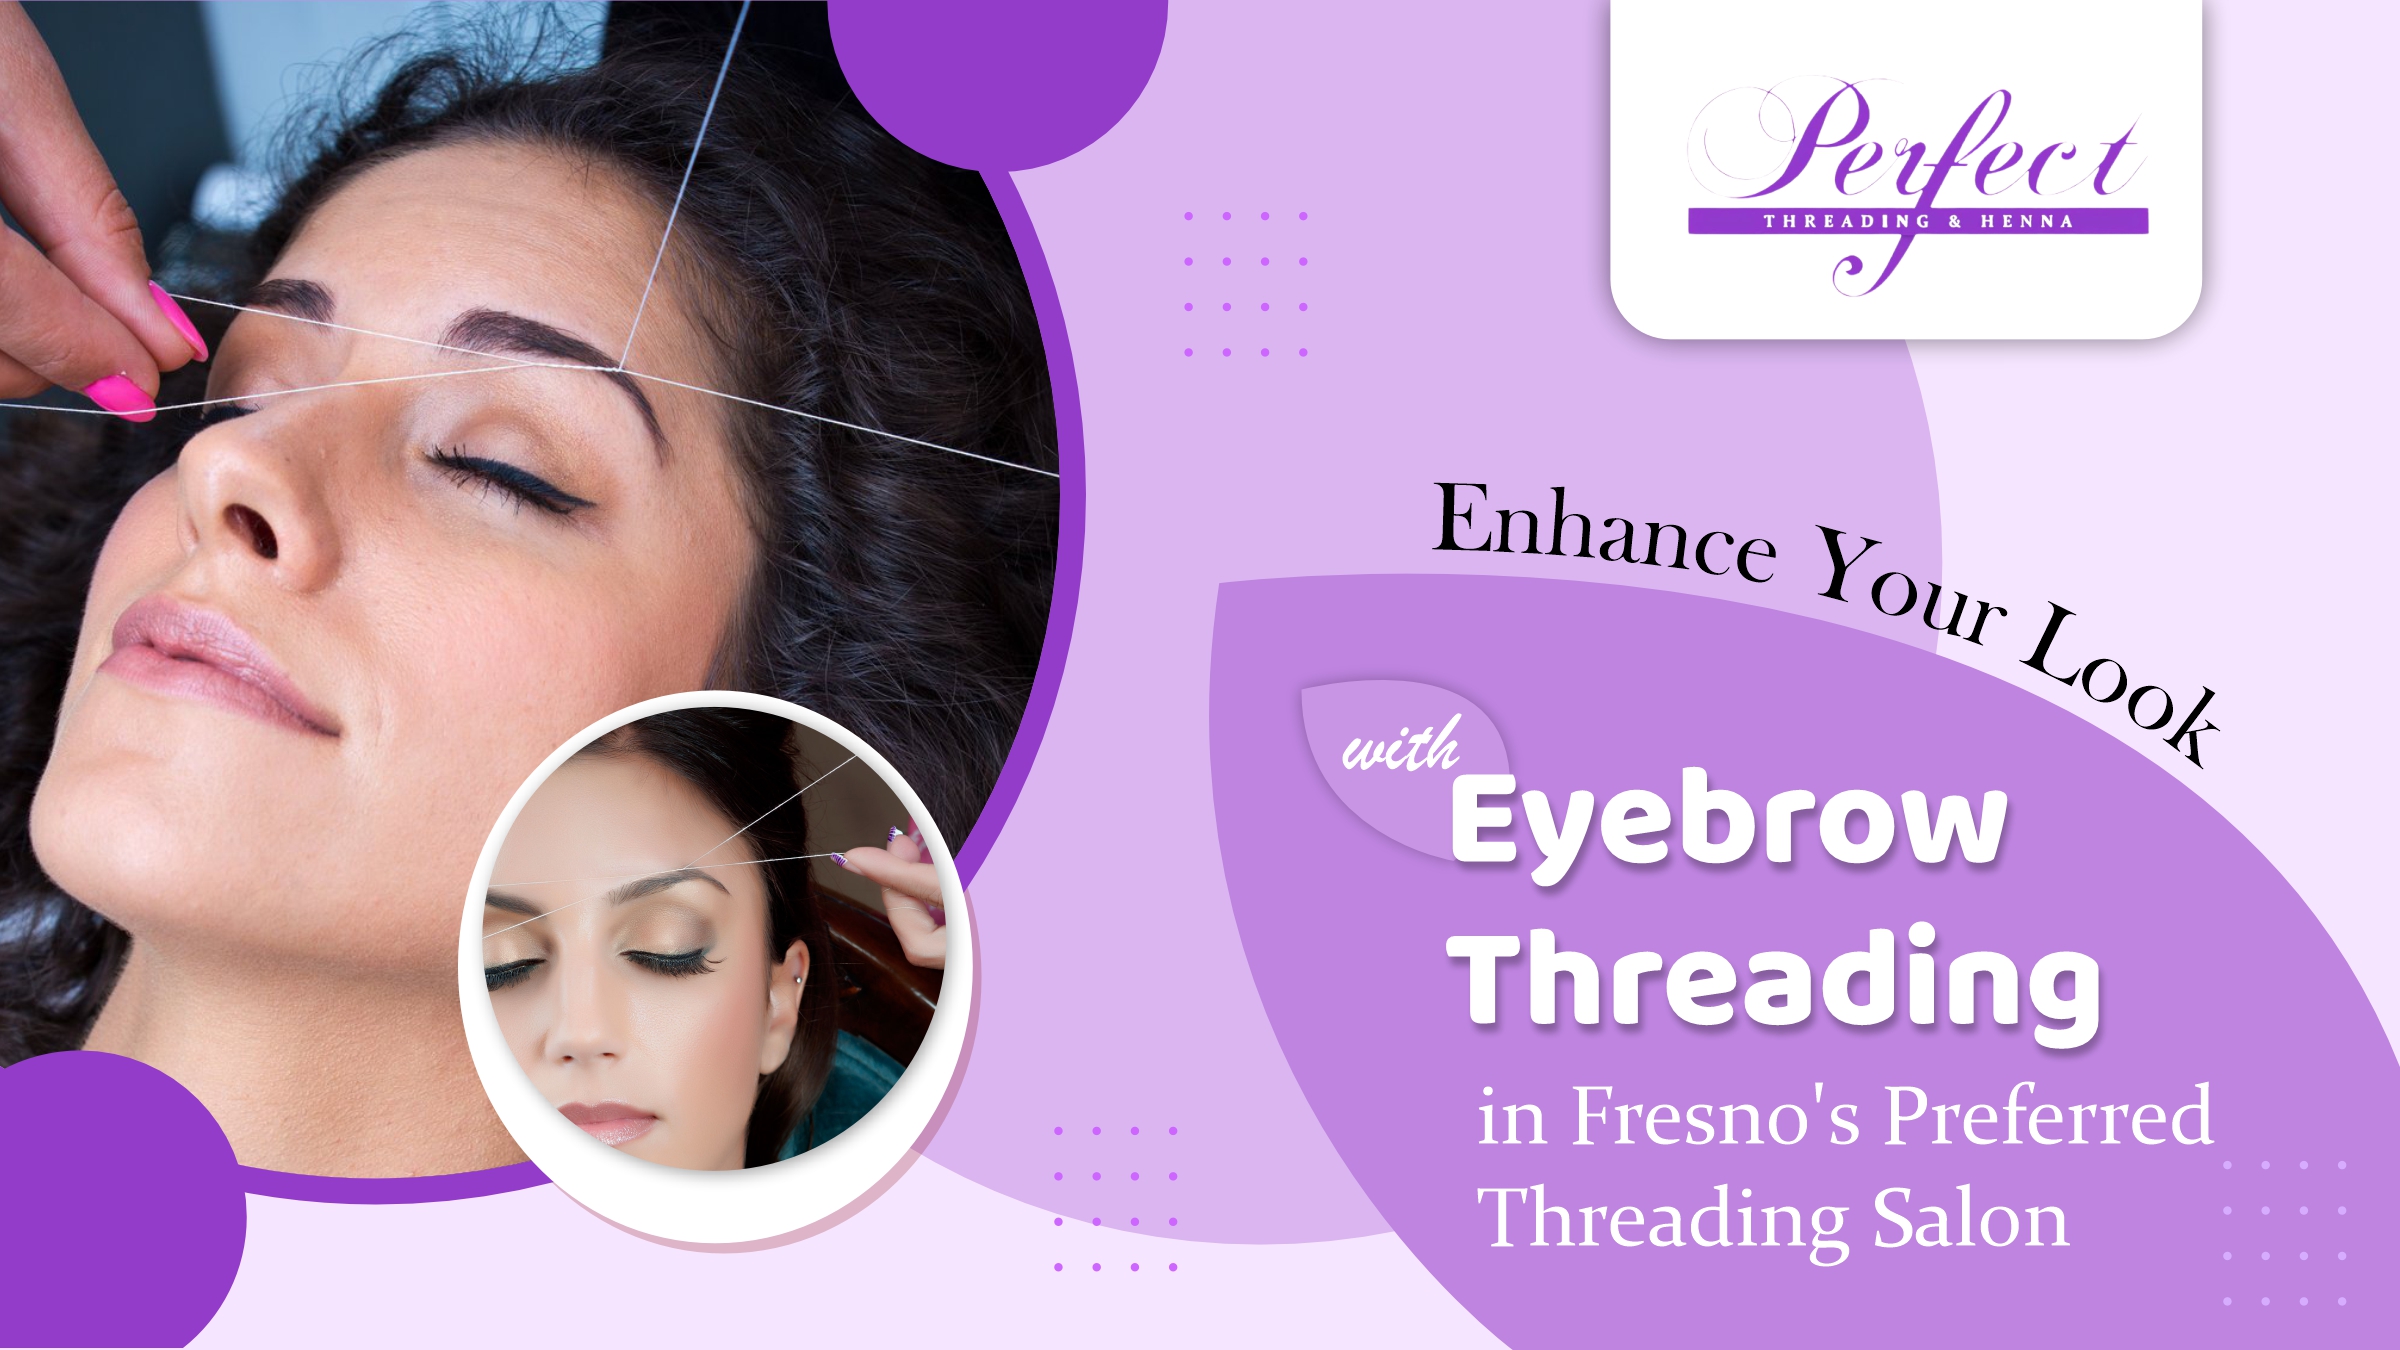 Enhance Your Look with Eyebrow Threading in Fresno's Preferred Threading Salon